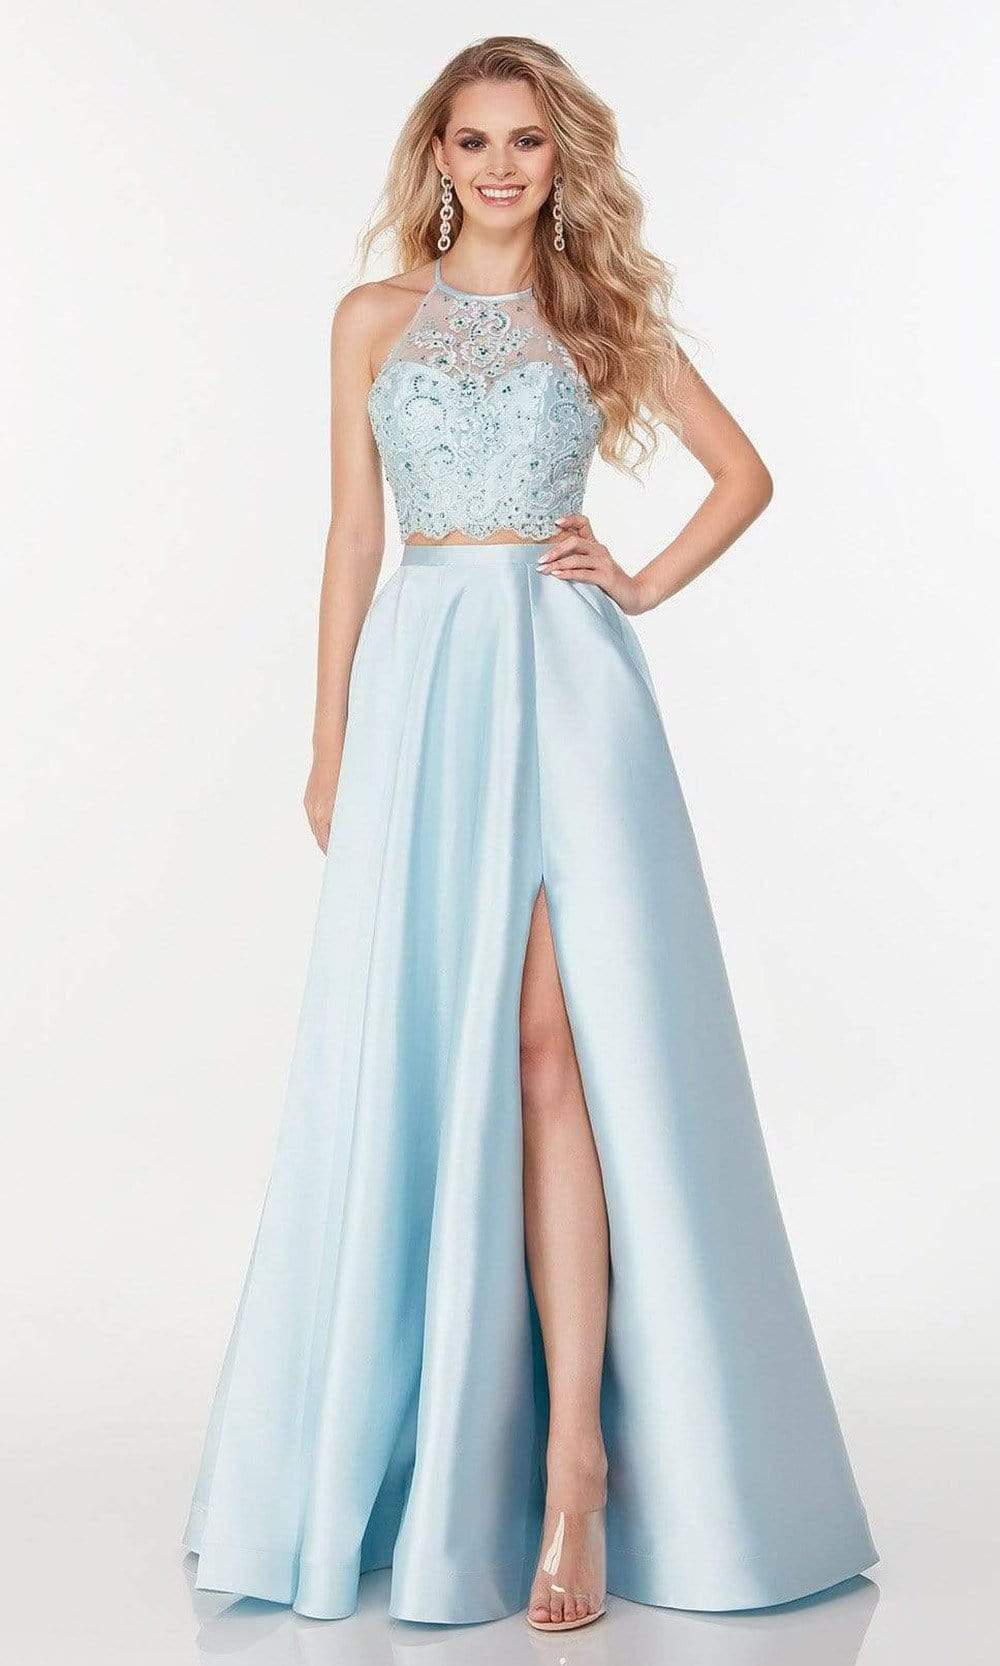 Alyce Paris - 61104 High Halter Two Piece Dress Prom Dresses 000 / Light Blue